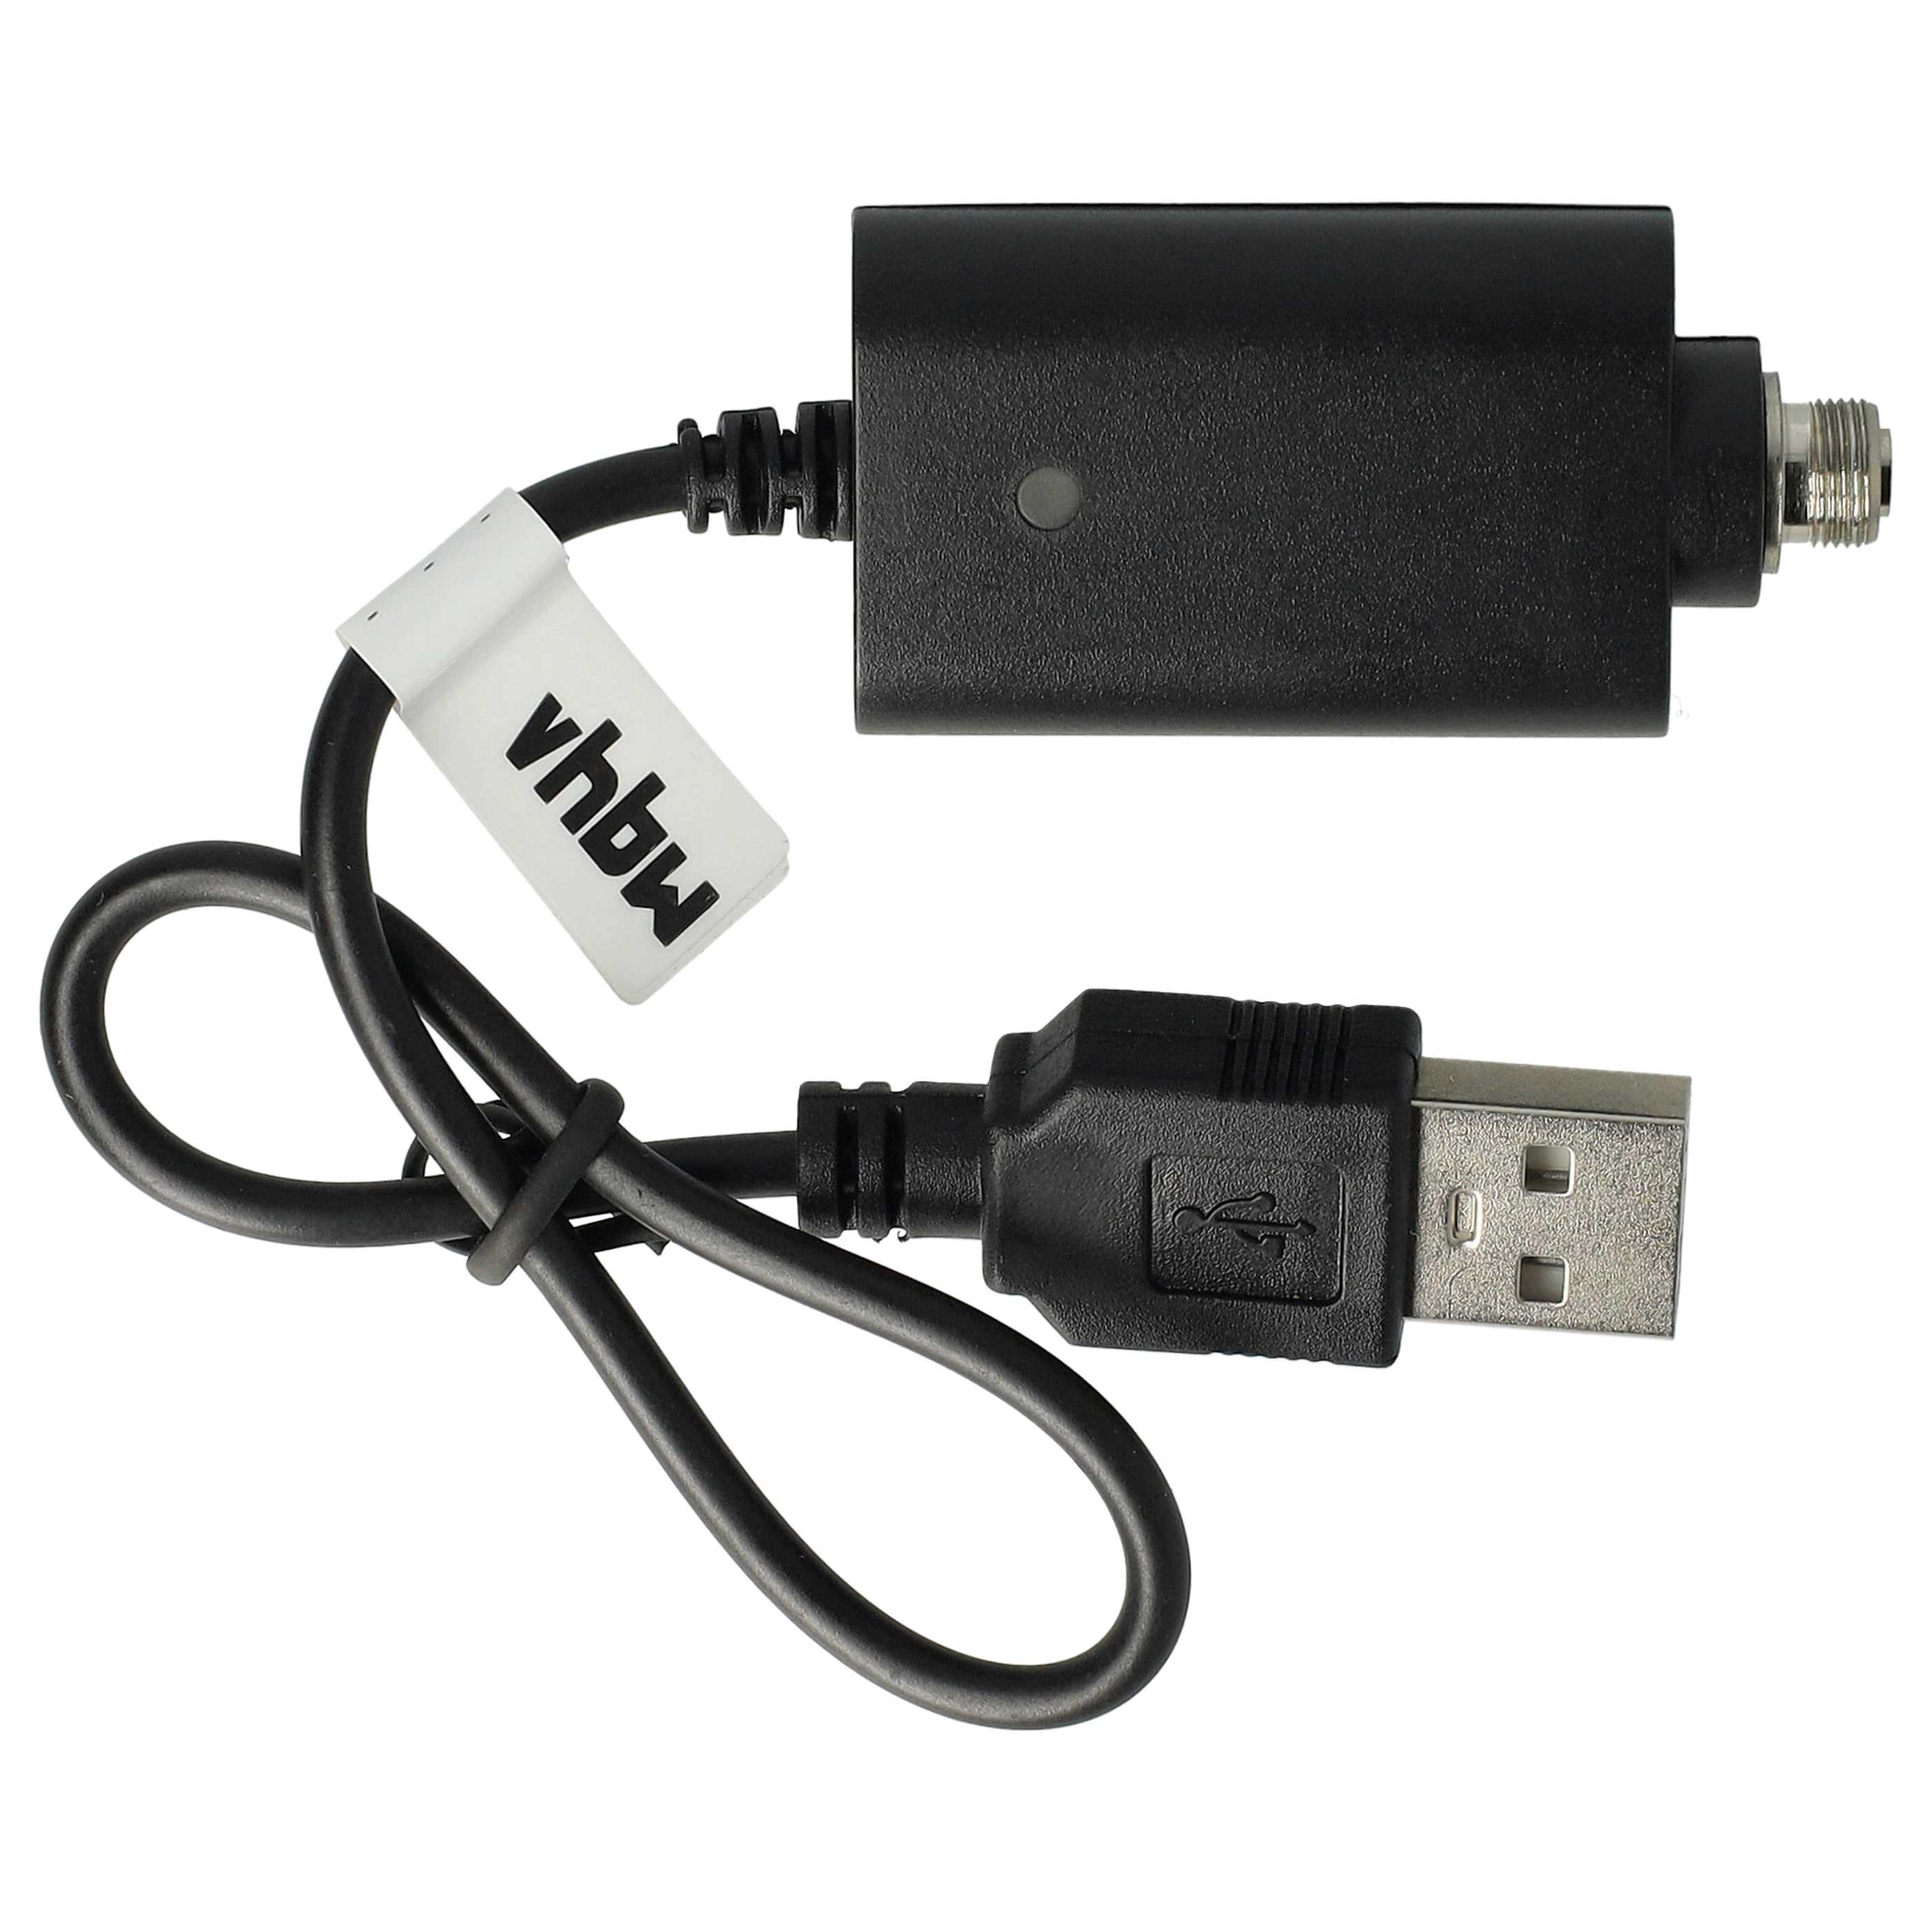 Ładowarka do e papierosa - kabel do ładowania USB, 25 cm